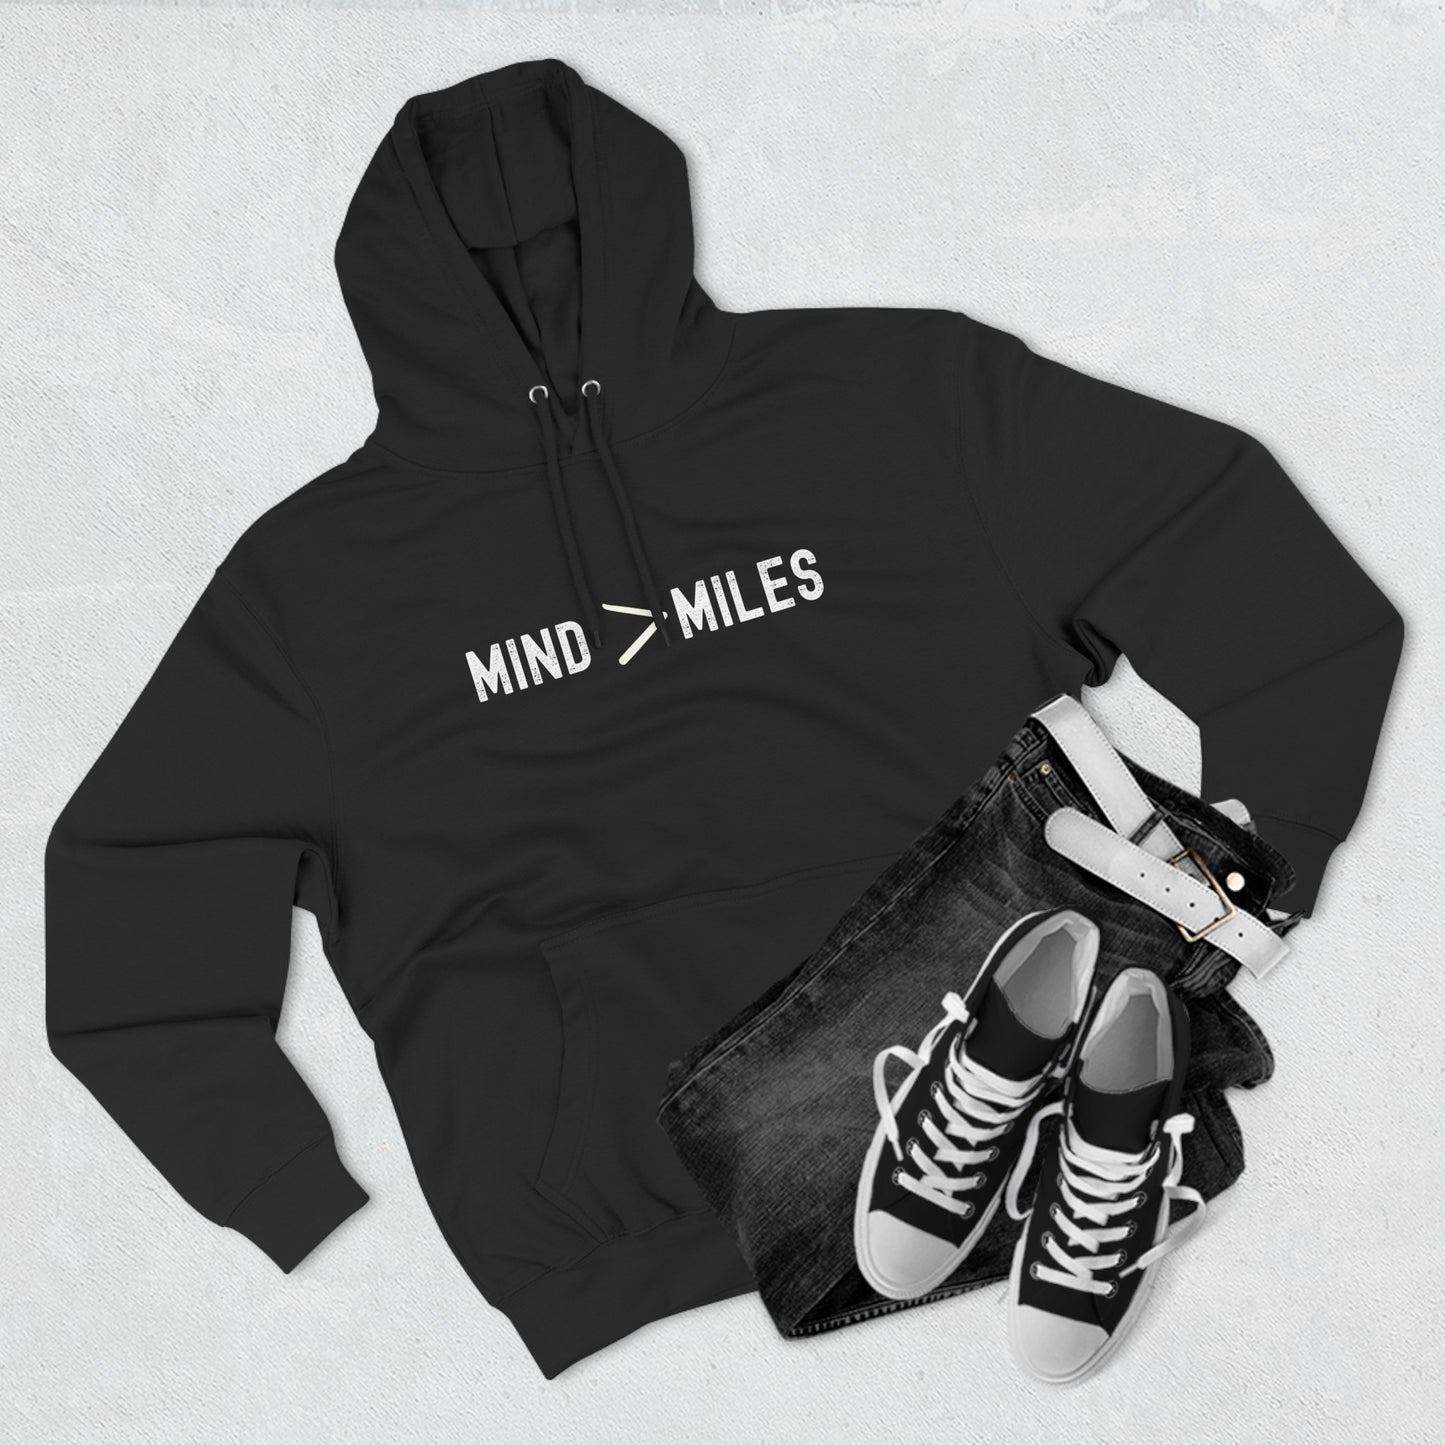 Mind > Miles Fleece Hoodie